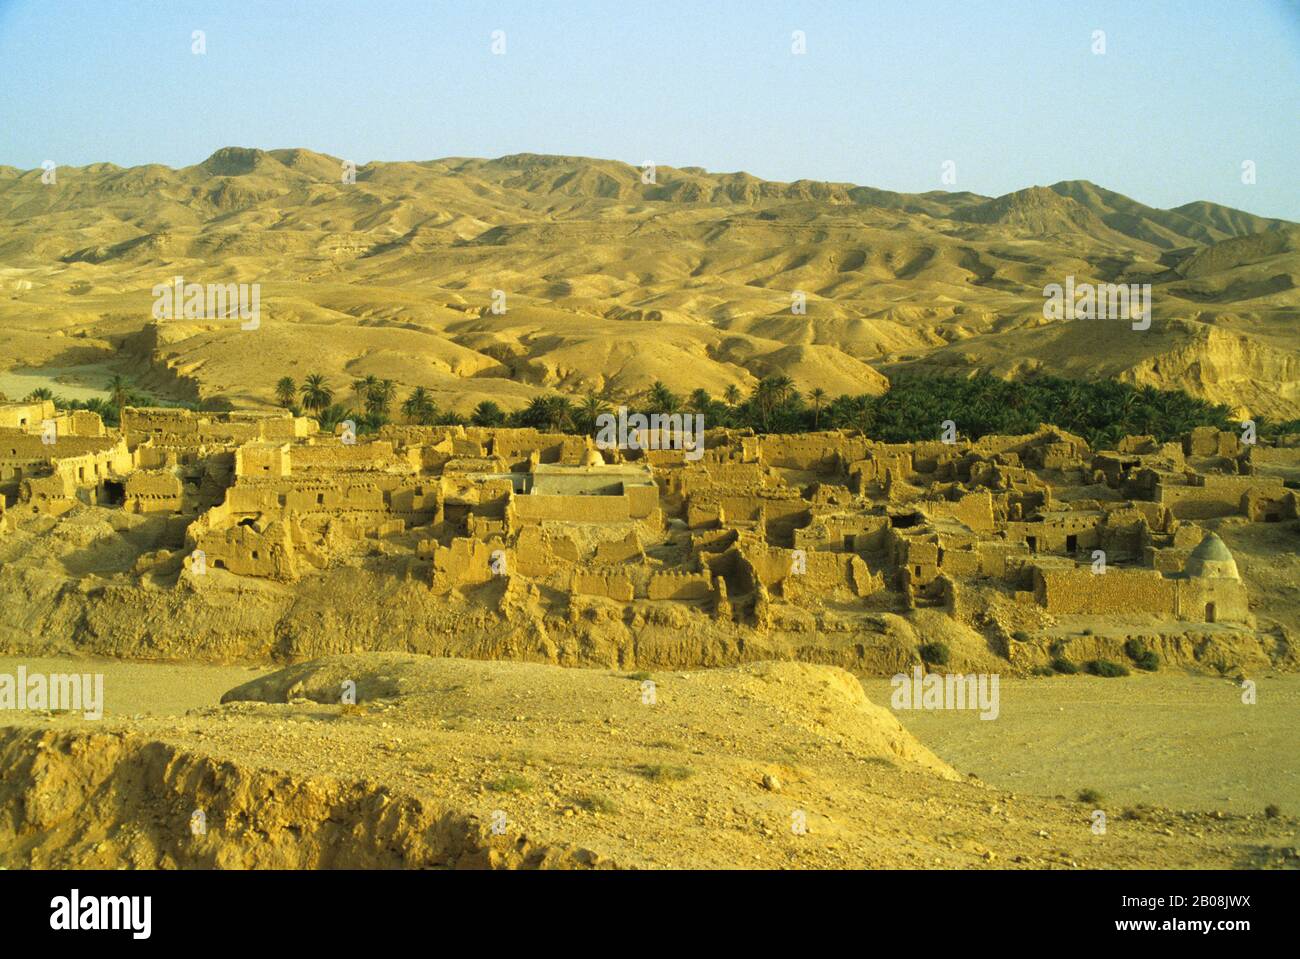 AFRICA, TUNISIA, SAHARA DESERT, OLD VILLAGE OF TAMERZA Stock Photo